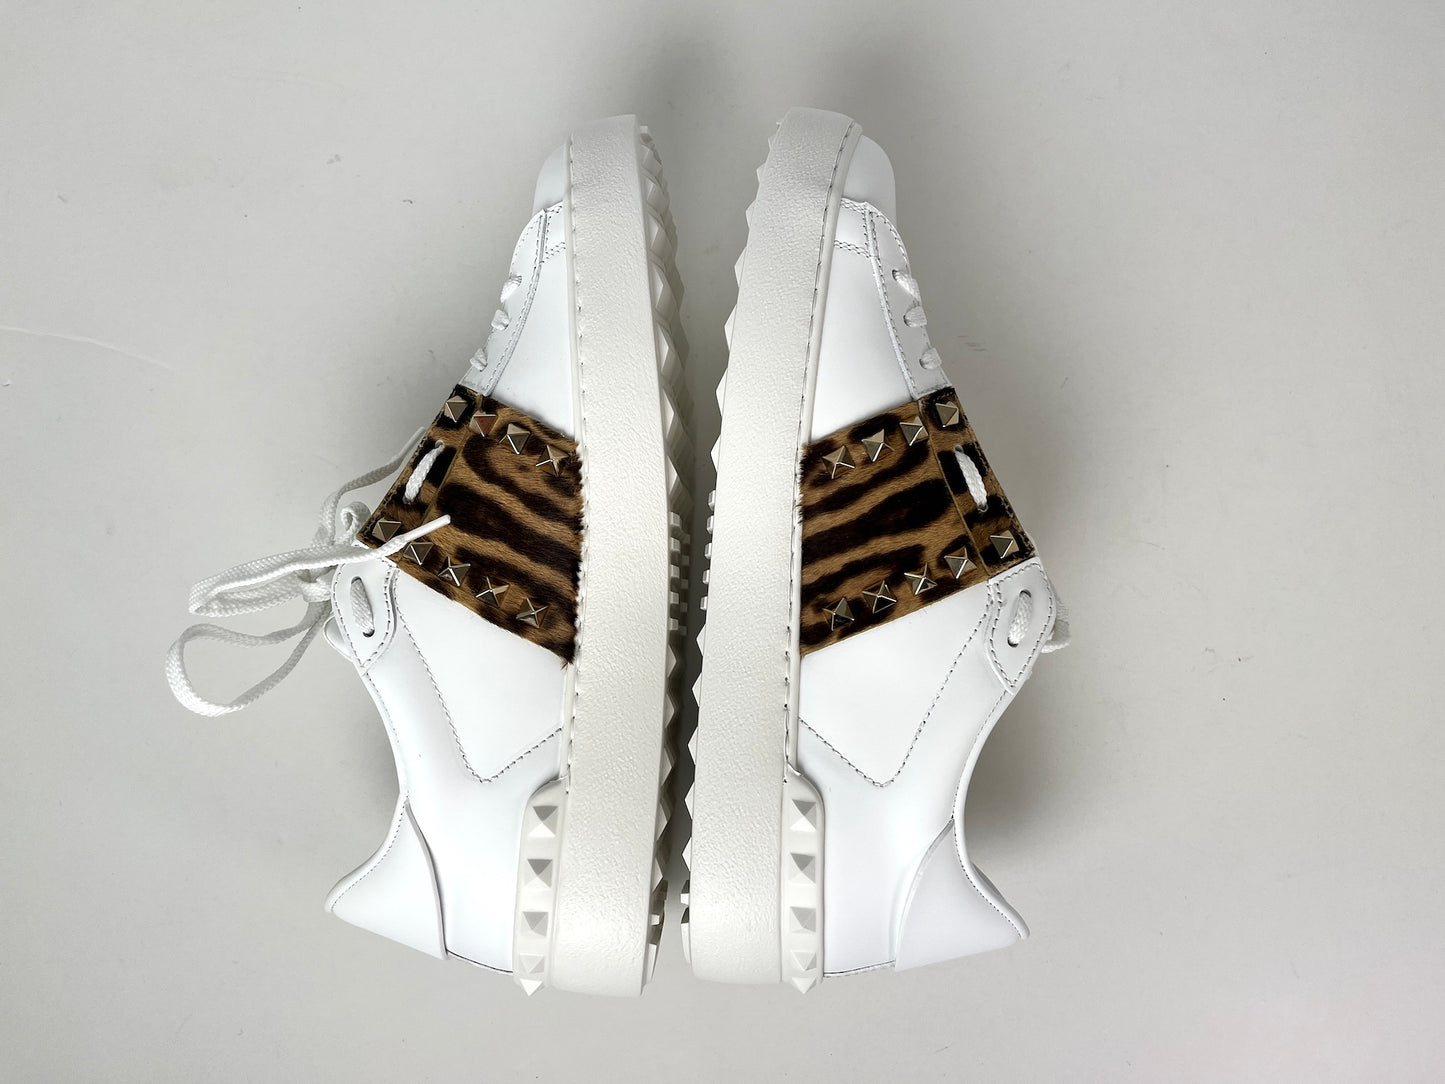 New Valentino Garavani Untitled White Animal Print Rockstud Leather Sneakers 40 9.5